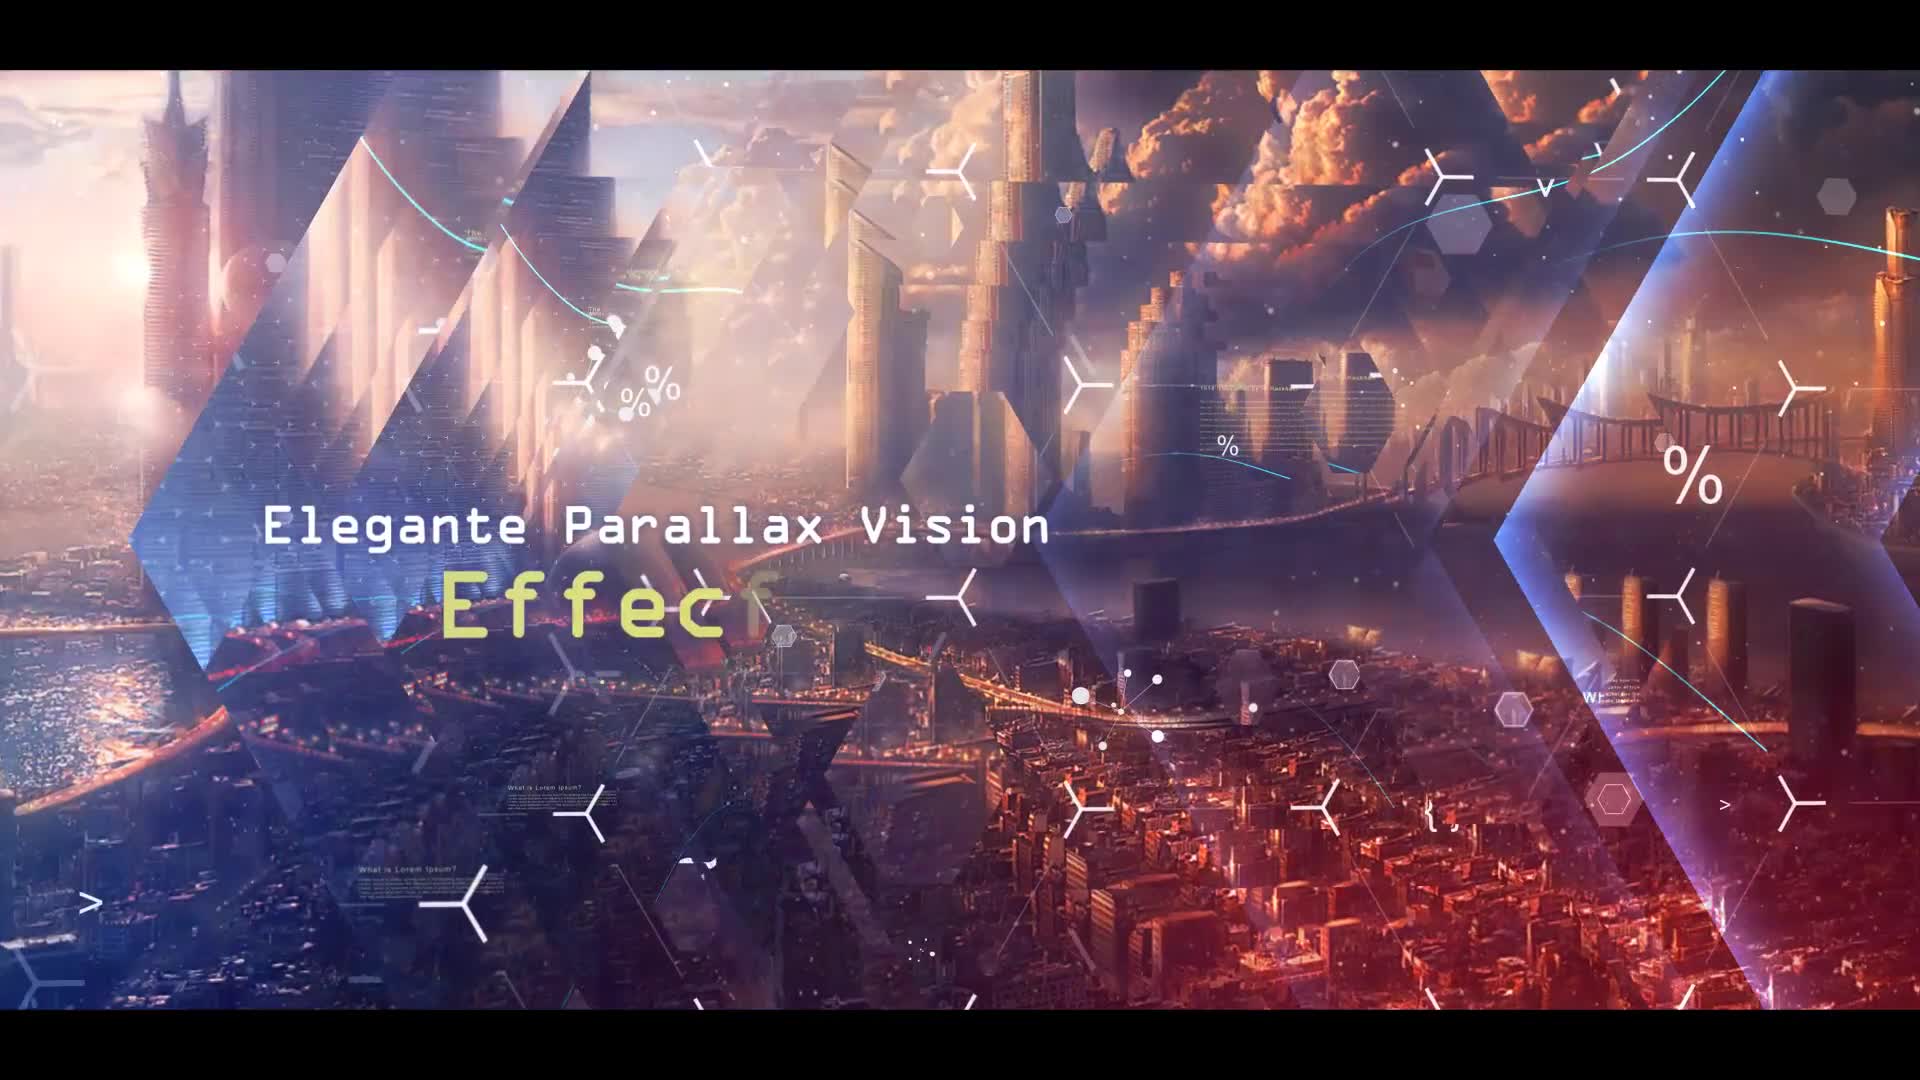 Hexa Parallax | Futuristic Slideshow - Download Videohive 19141535